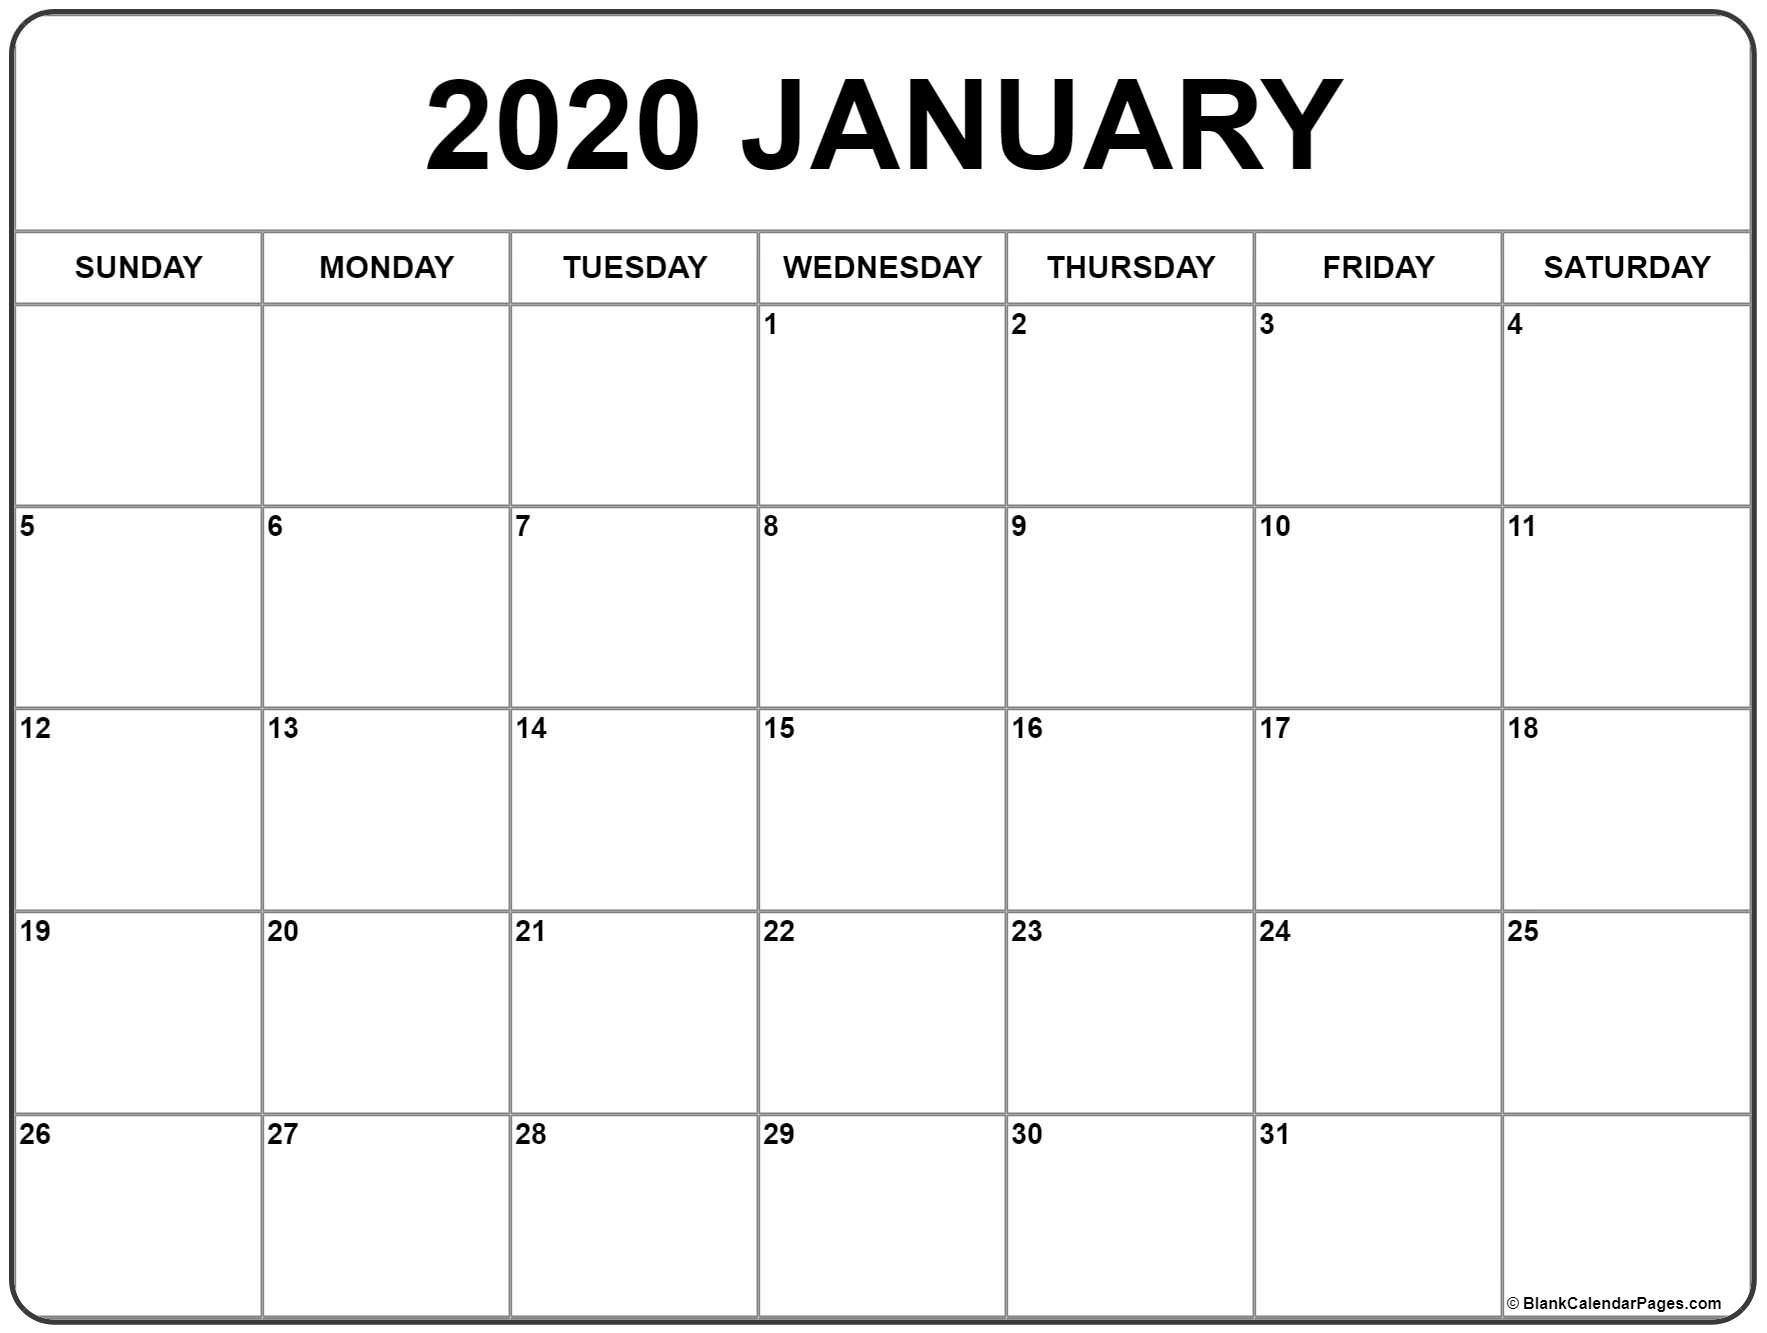 January 2020 Calendar | Free Printable Monthly Calendars Exceptional Blank January 2020 Calendar Printable Free